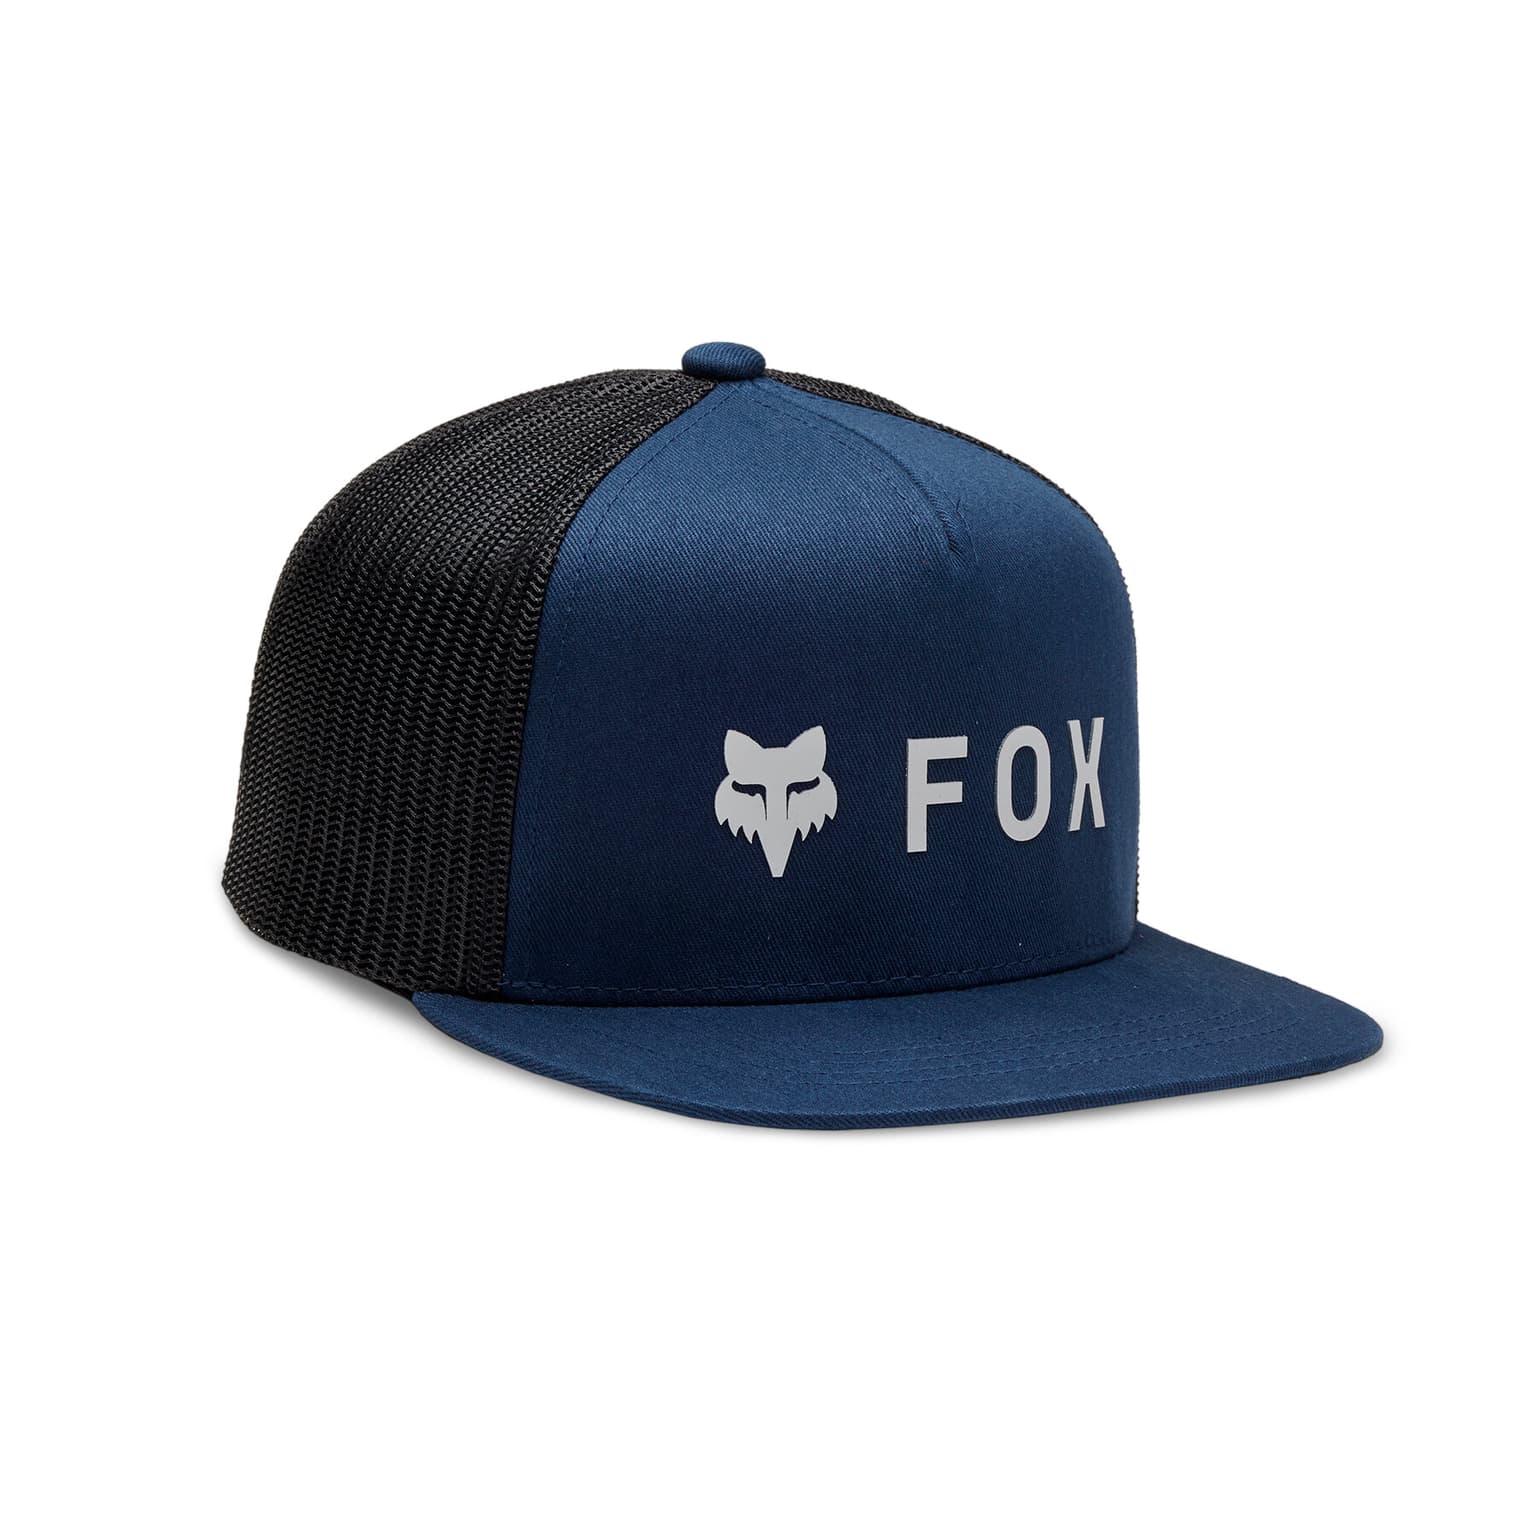 Fox Fox YOUTH ABSOLUTE SB MESH Cappellino blu-scuro 1